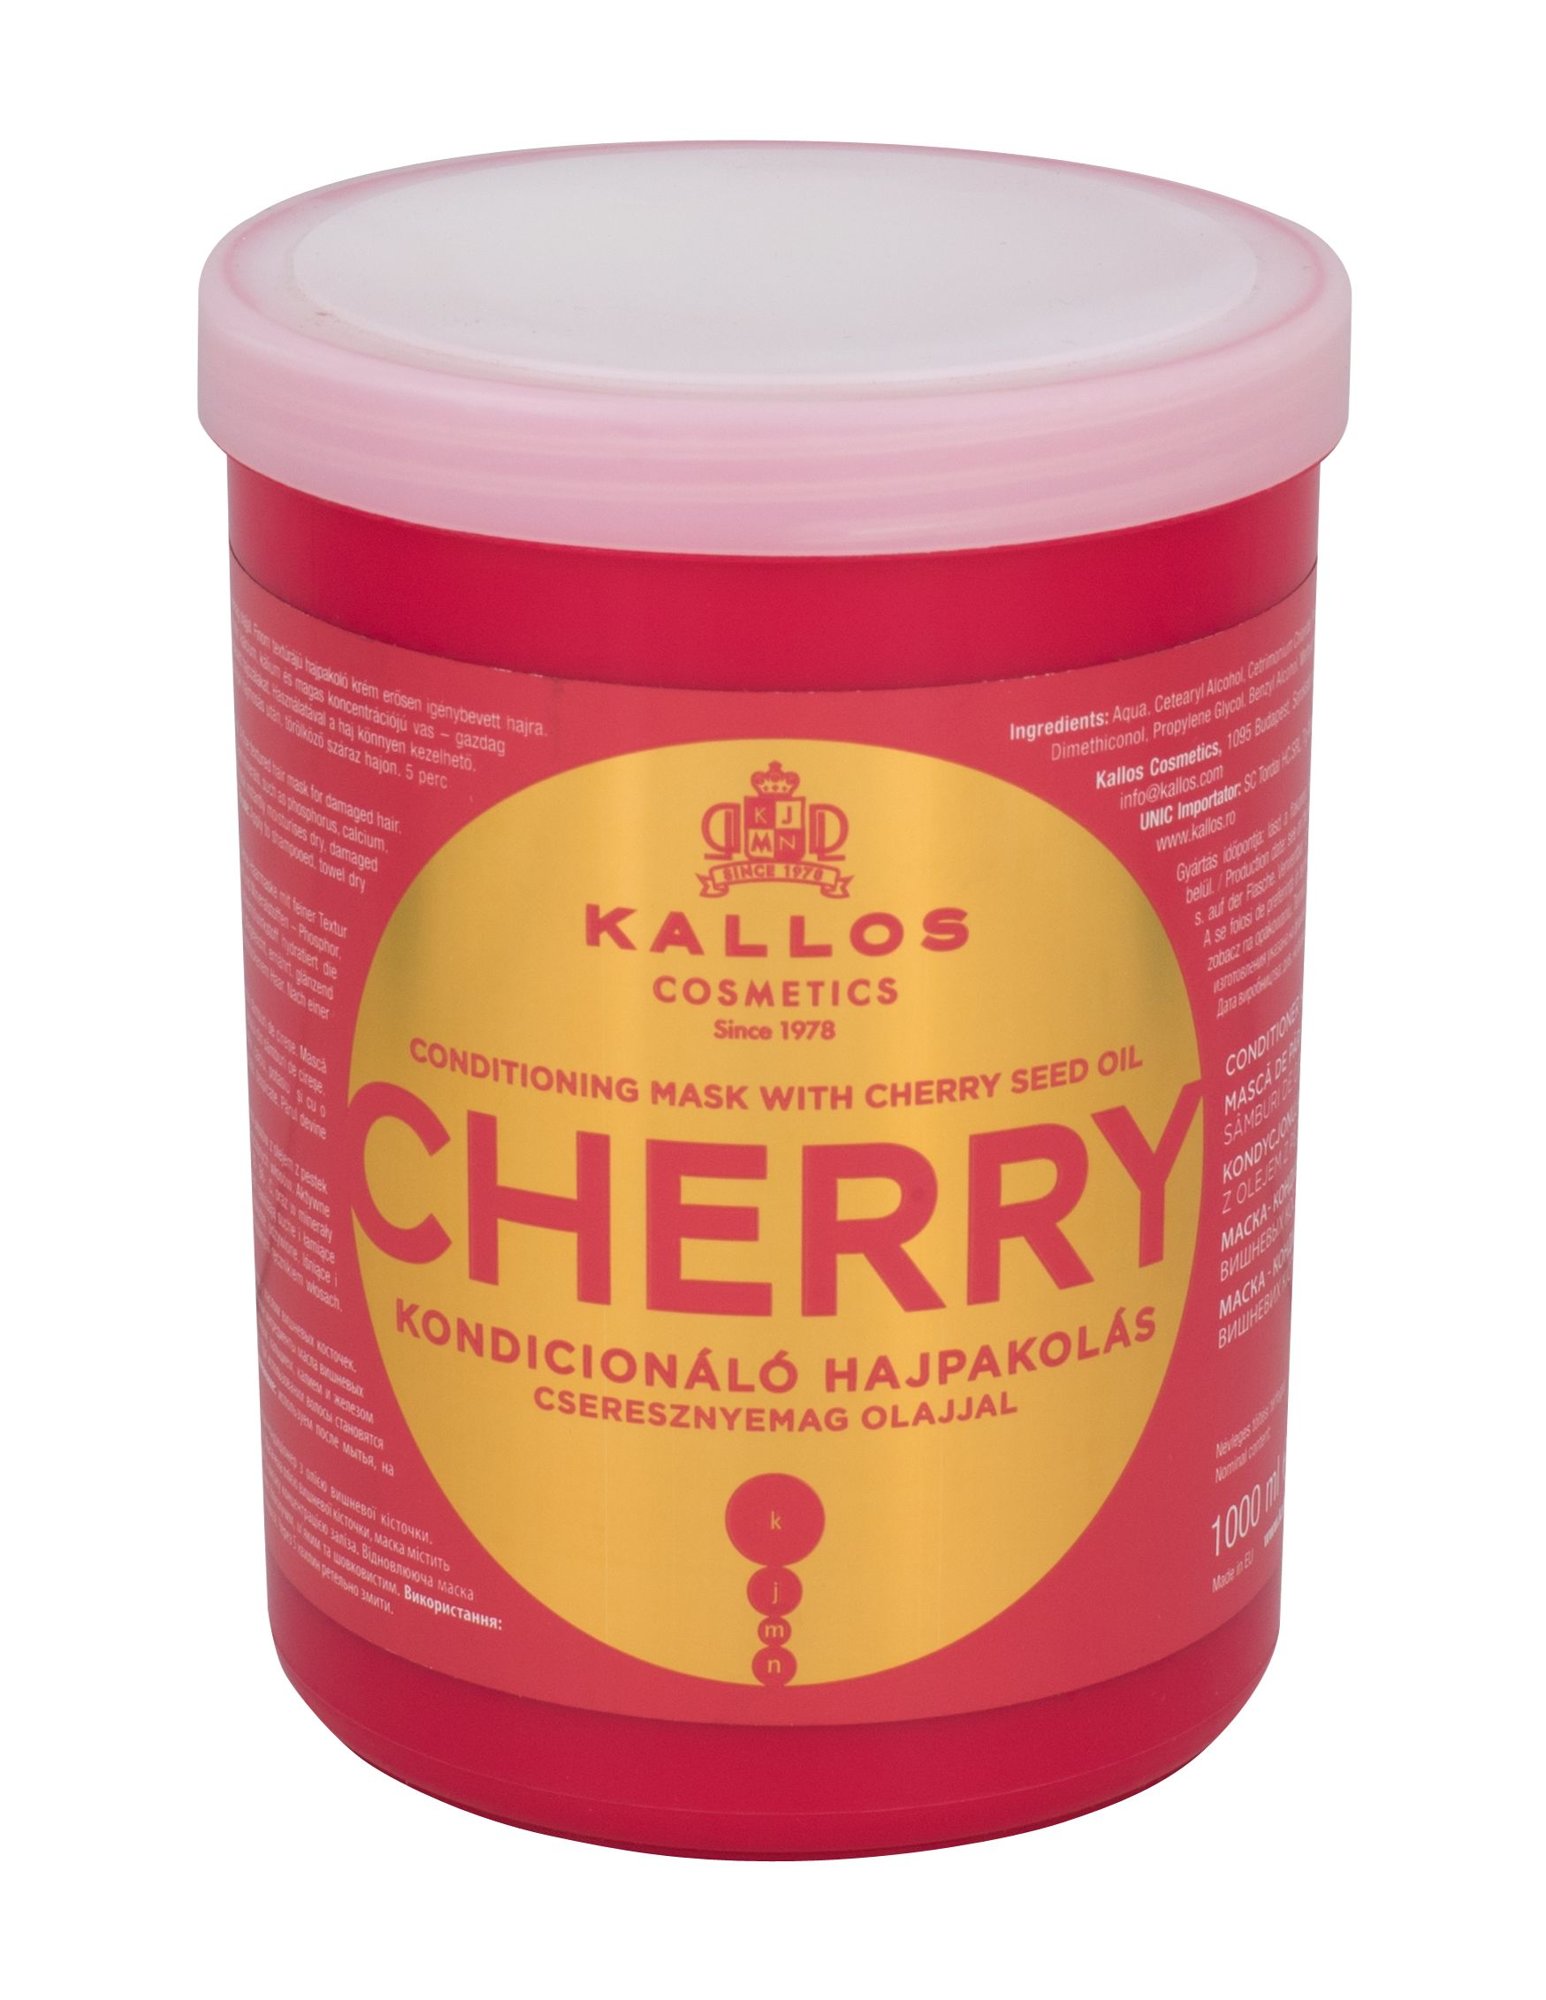 Kallos Cosmetics Cherry Hair Mask